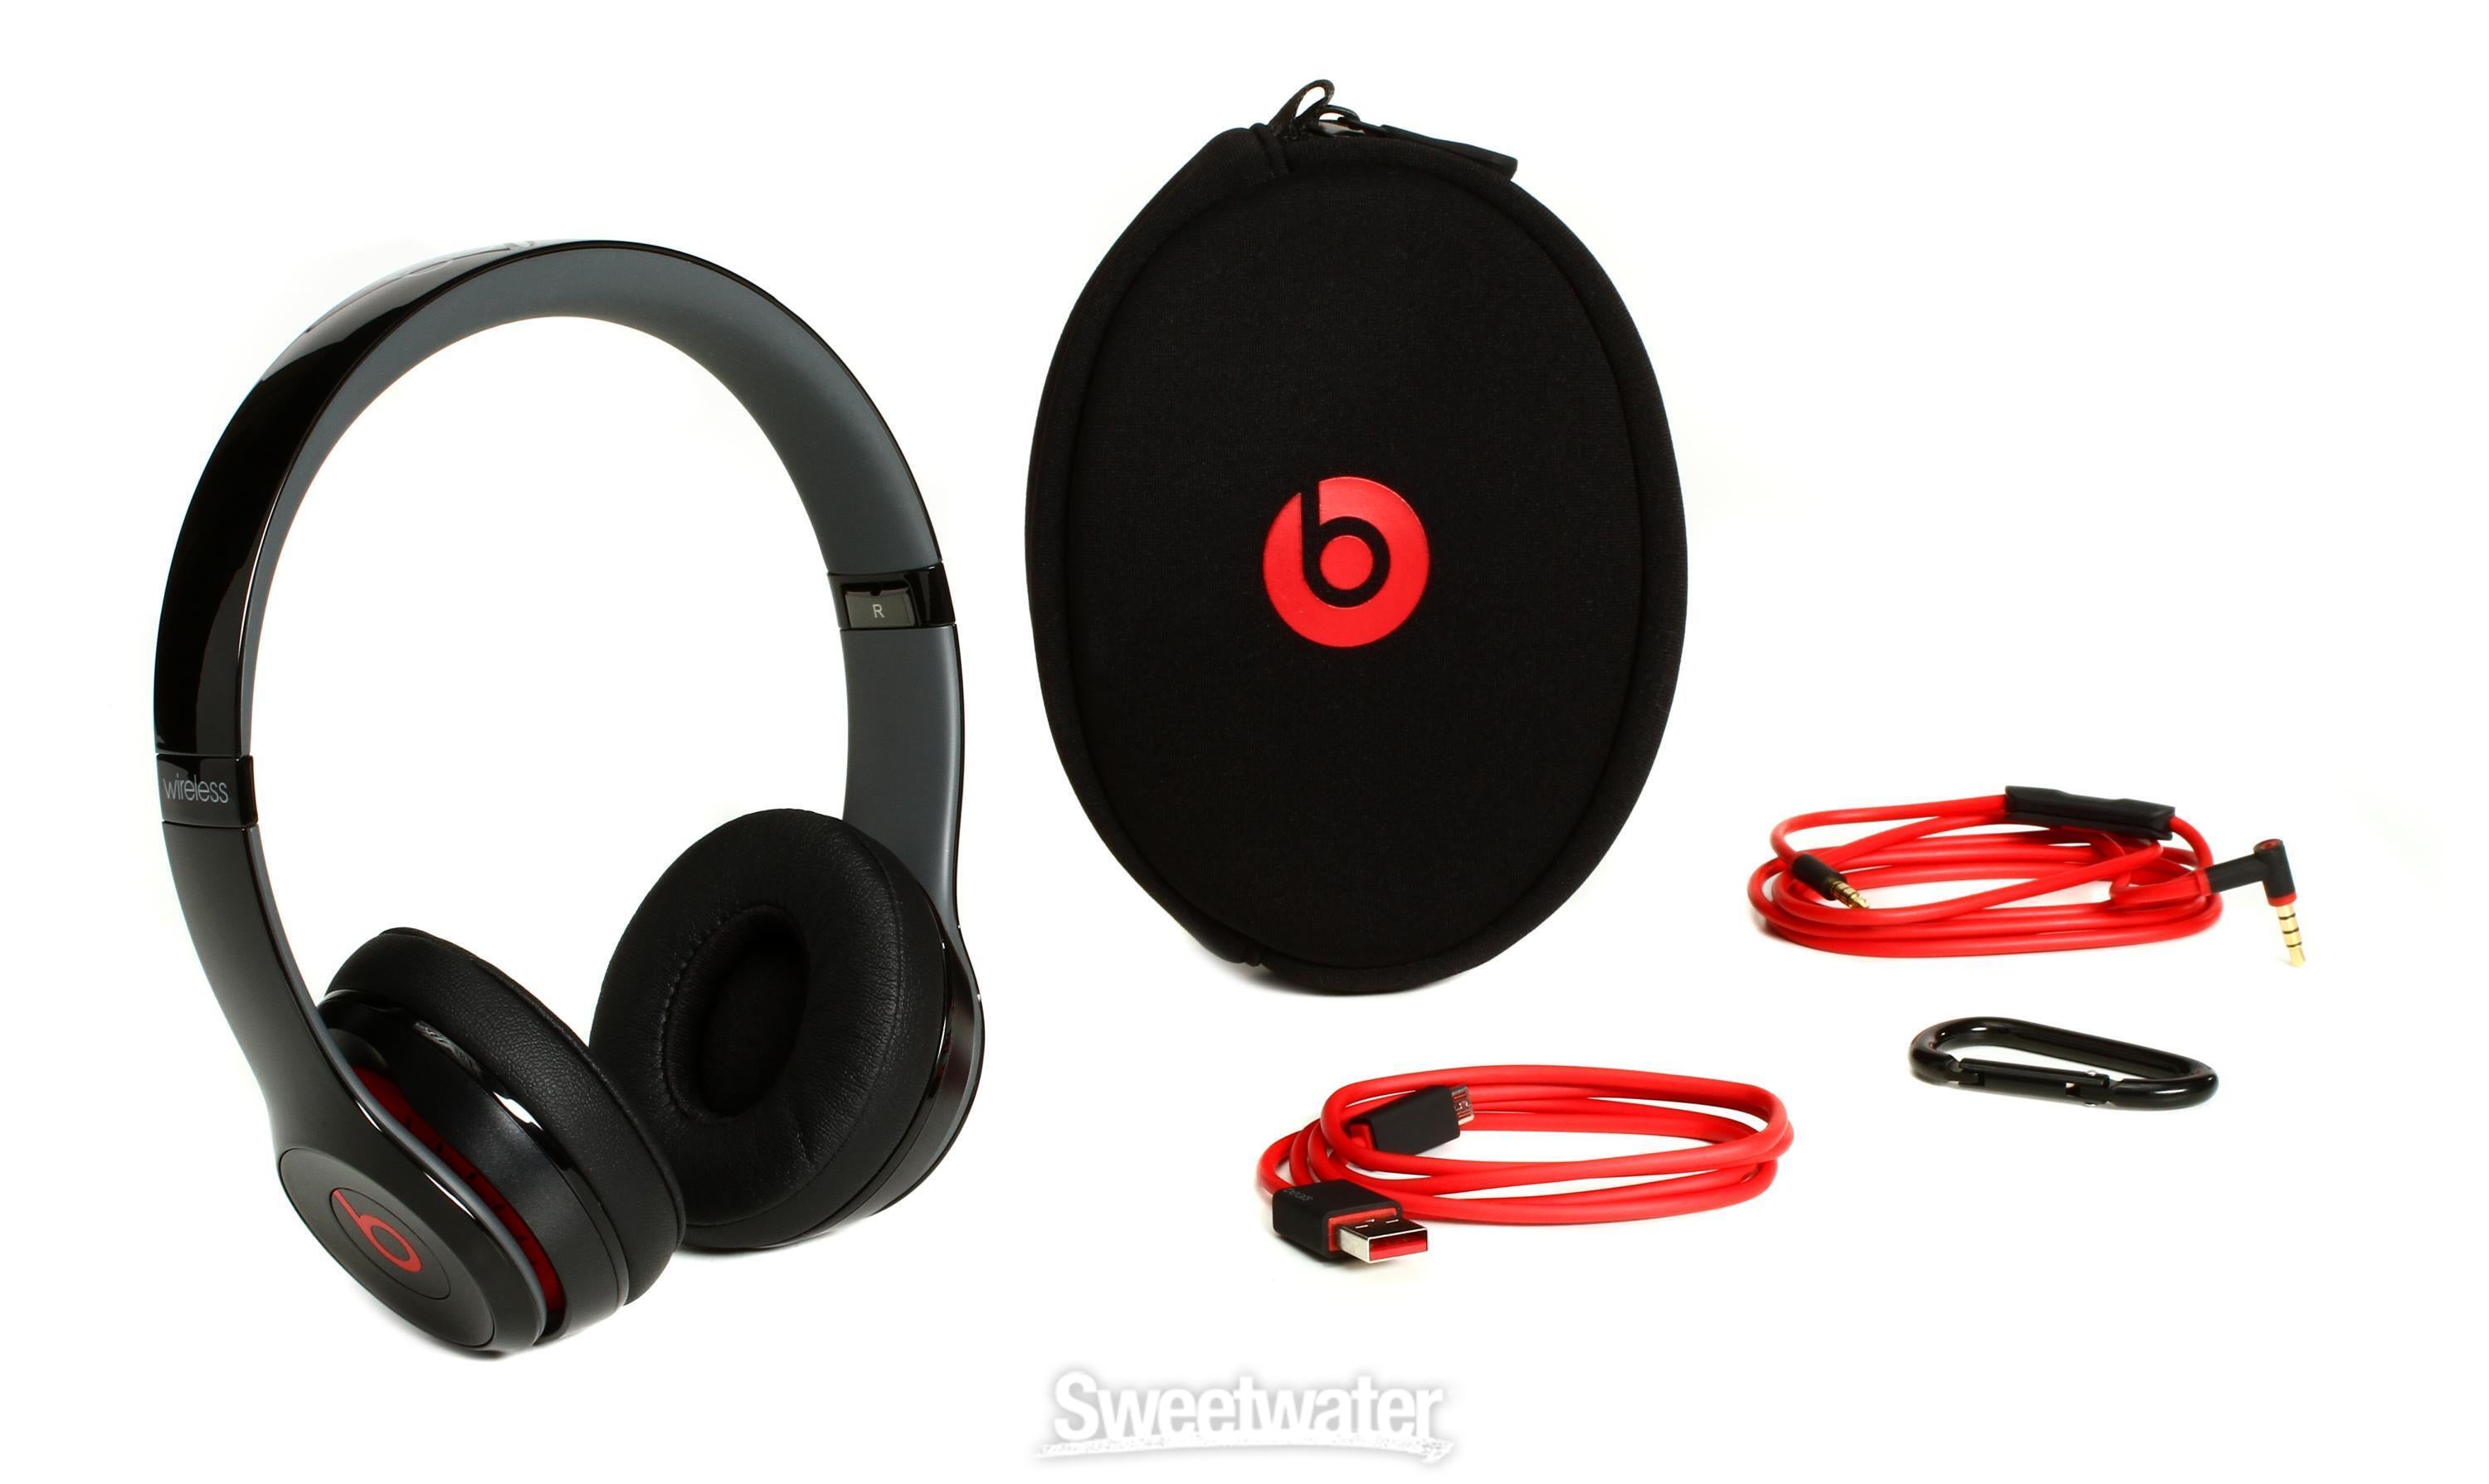 Beats Solo 2 Wireless Bluetooth Headphones - Black | Sweetwater